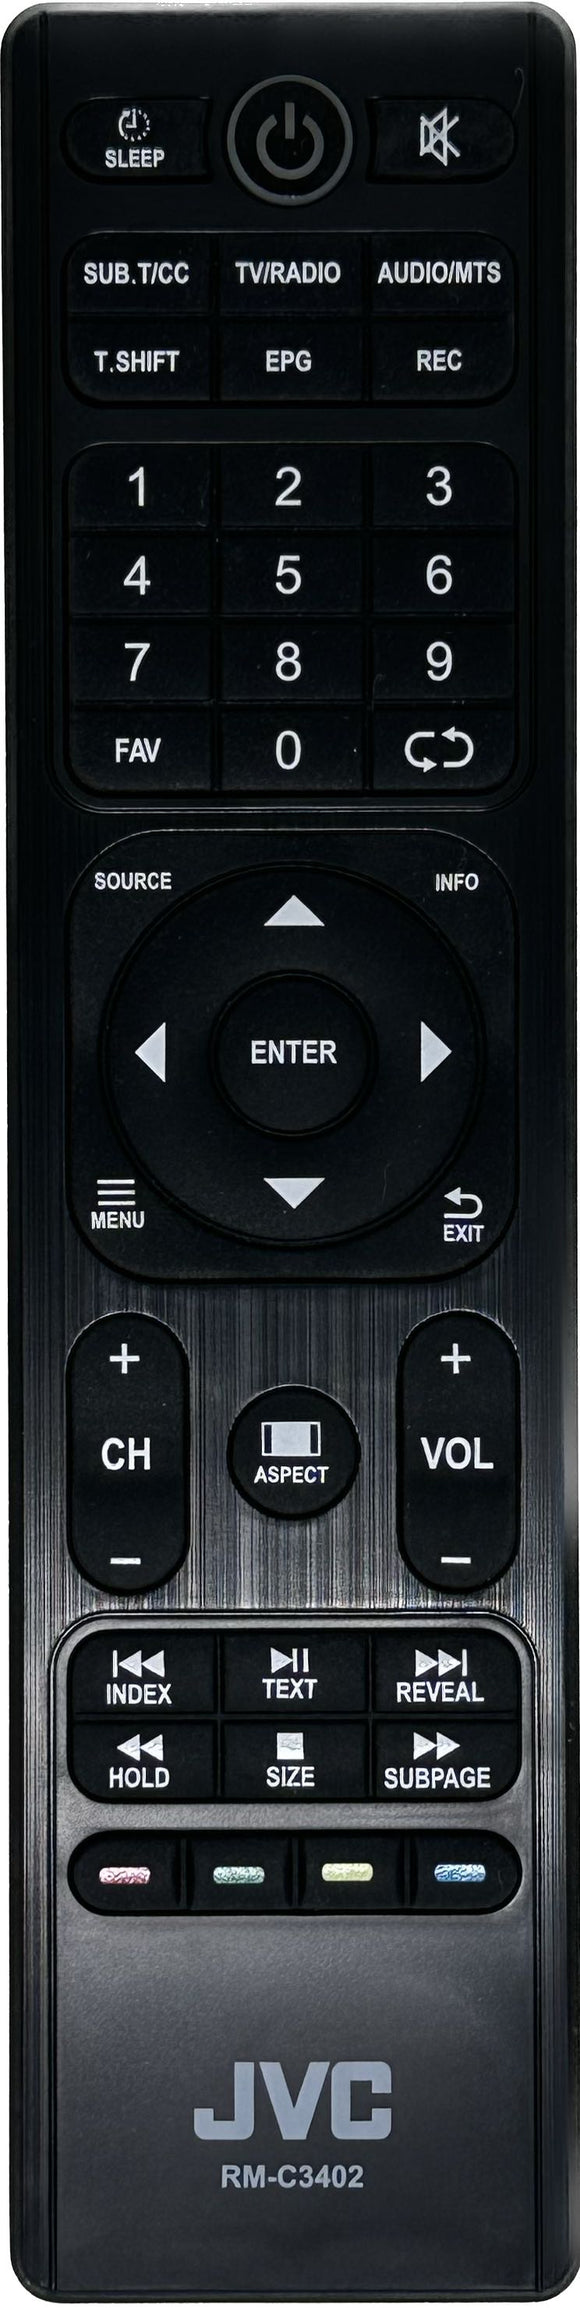 Original JVC TV Remote Control RM-C3402 - LT50N790A, LT55N684A, LT58N790A, LT65N785A Genuine